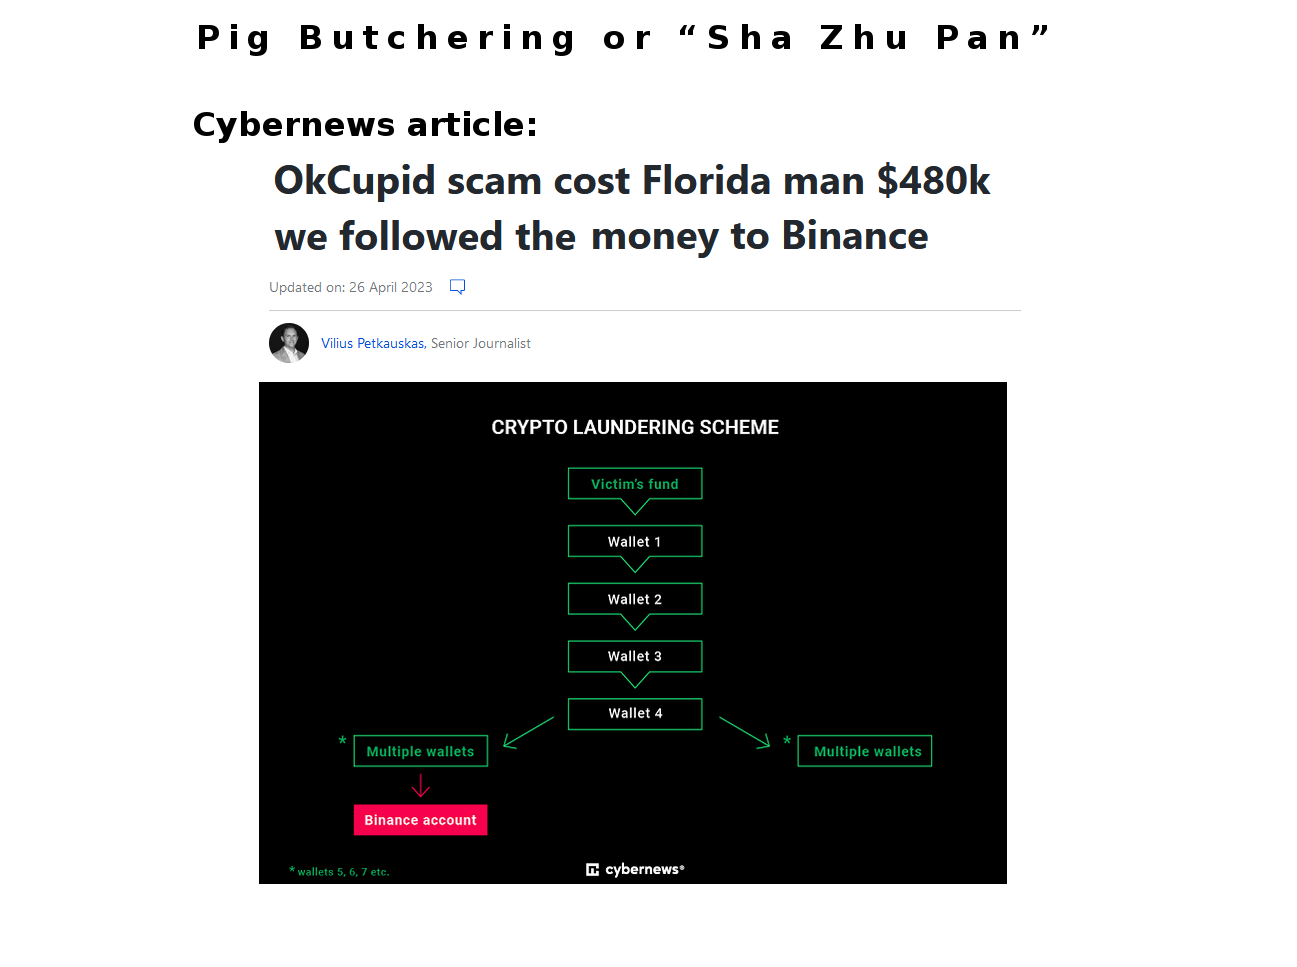 More Pig Butchering or “Sha Zhu Pan”